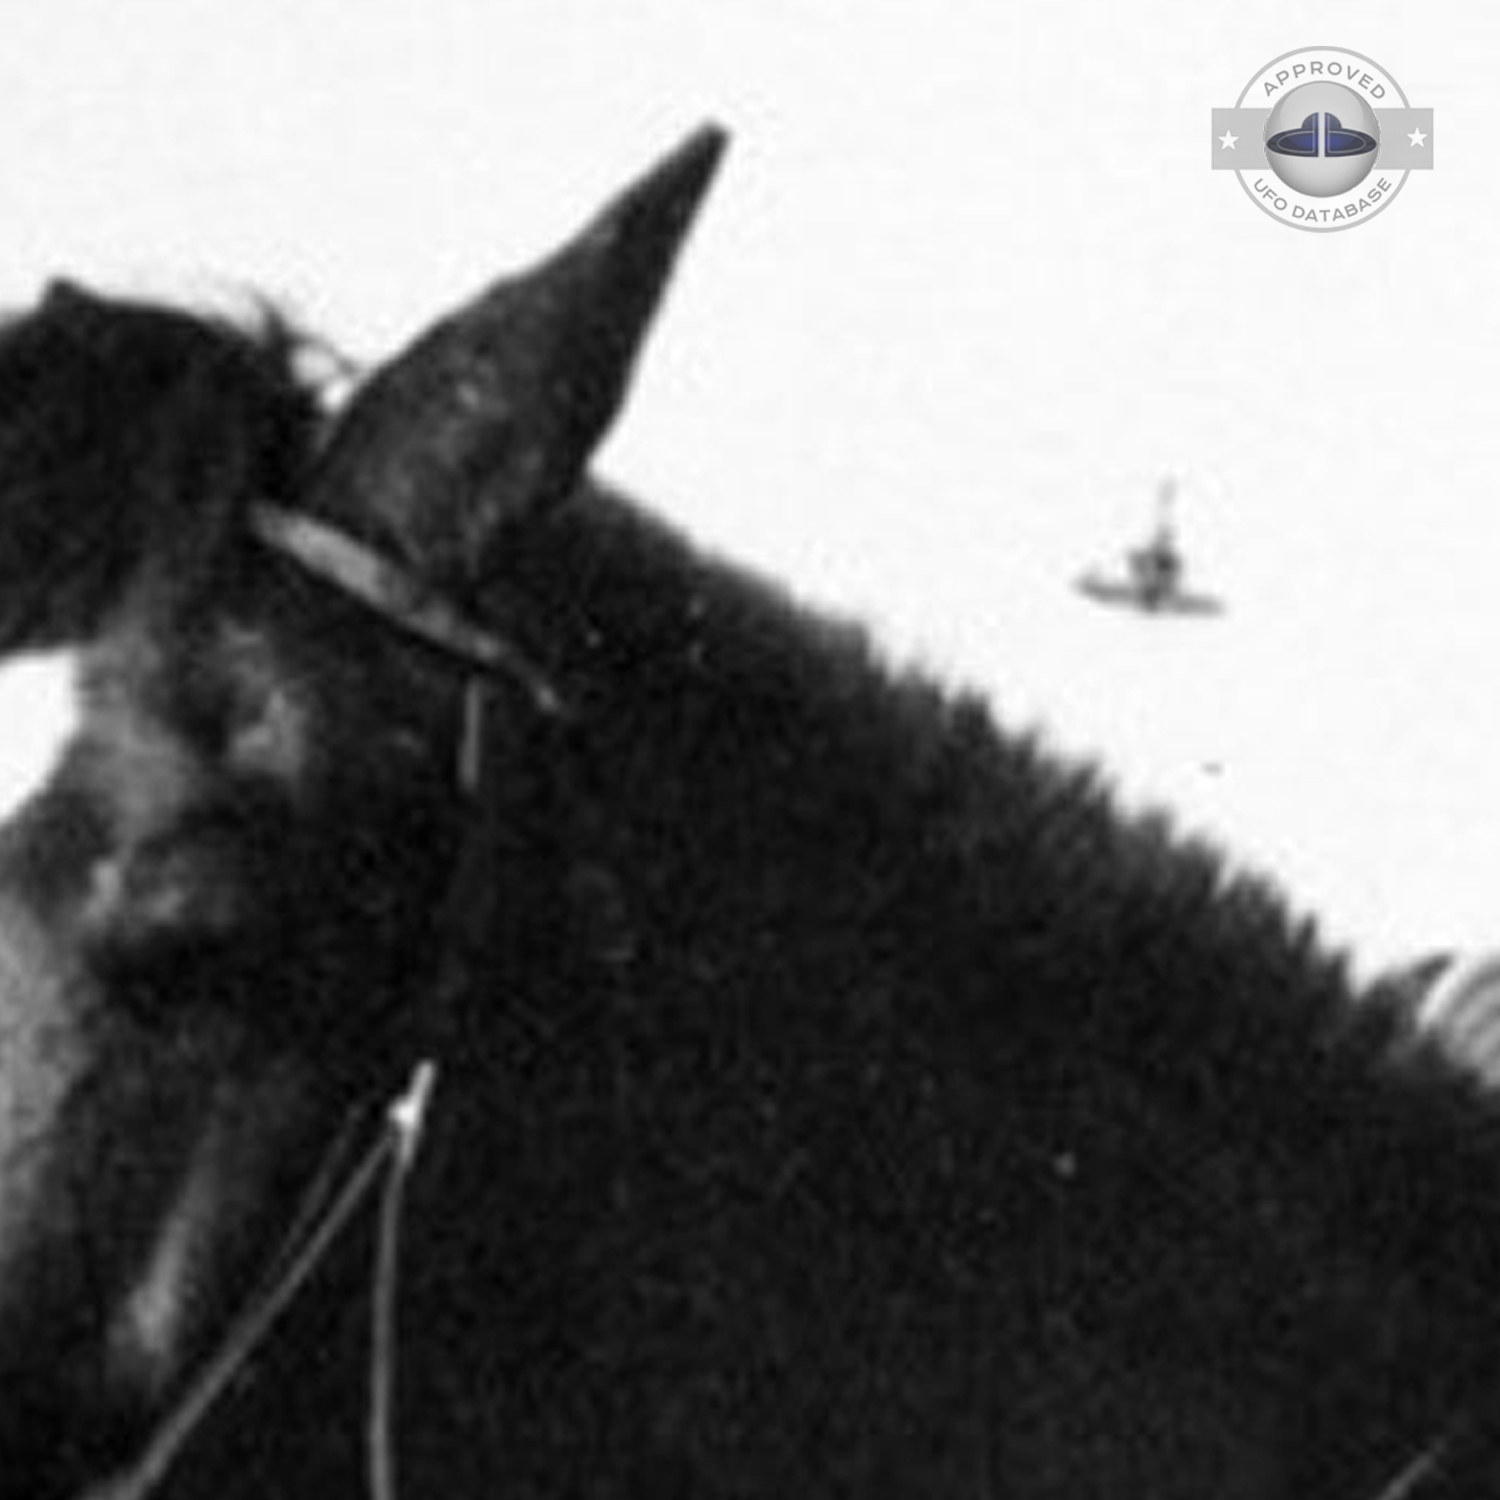 UFO picture - Jack LeMonde sitting on a horse - Burbank, California UFO Picture #115-4